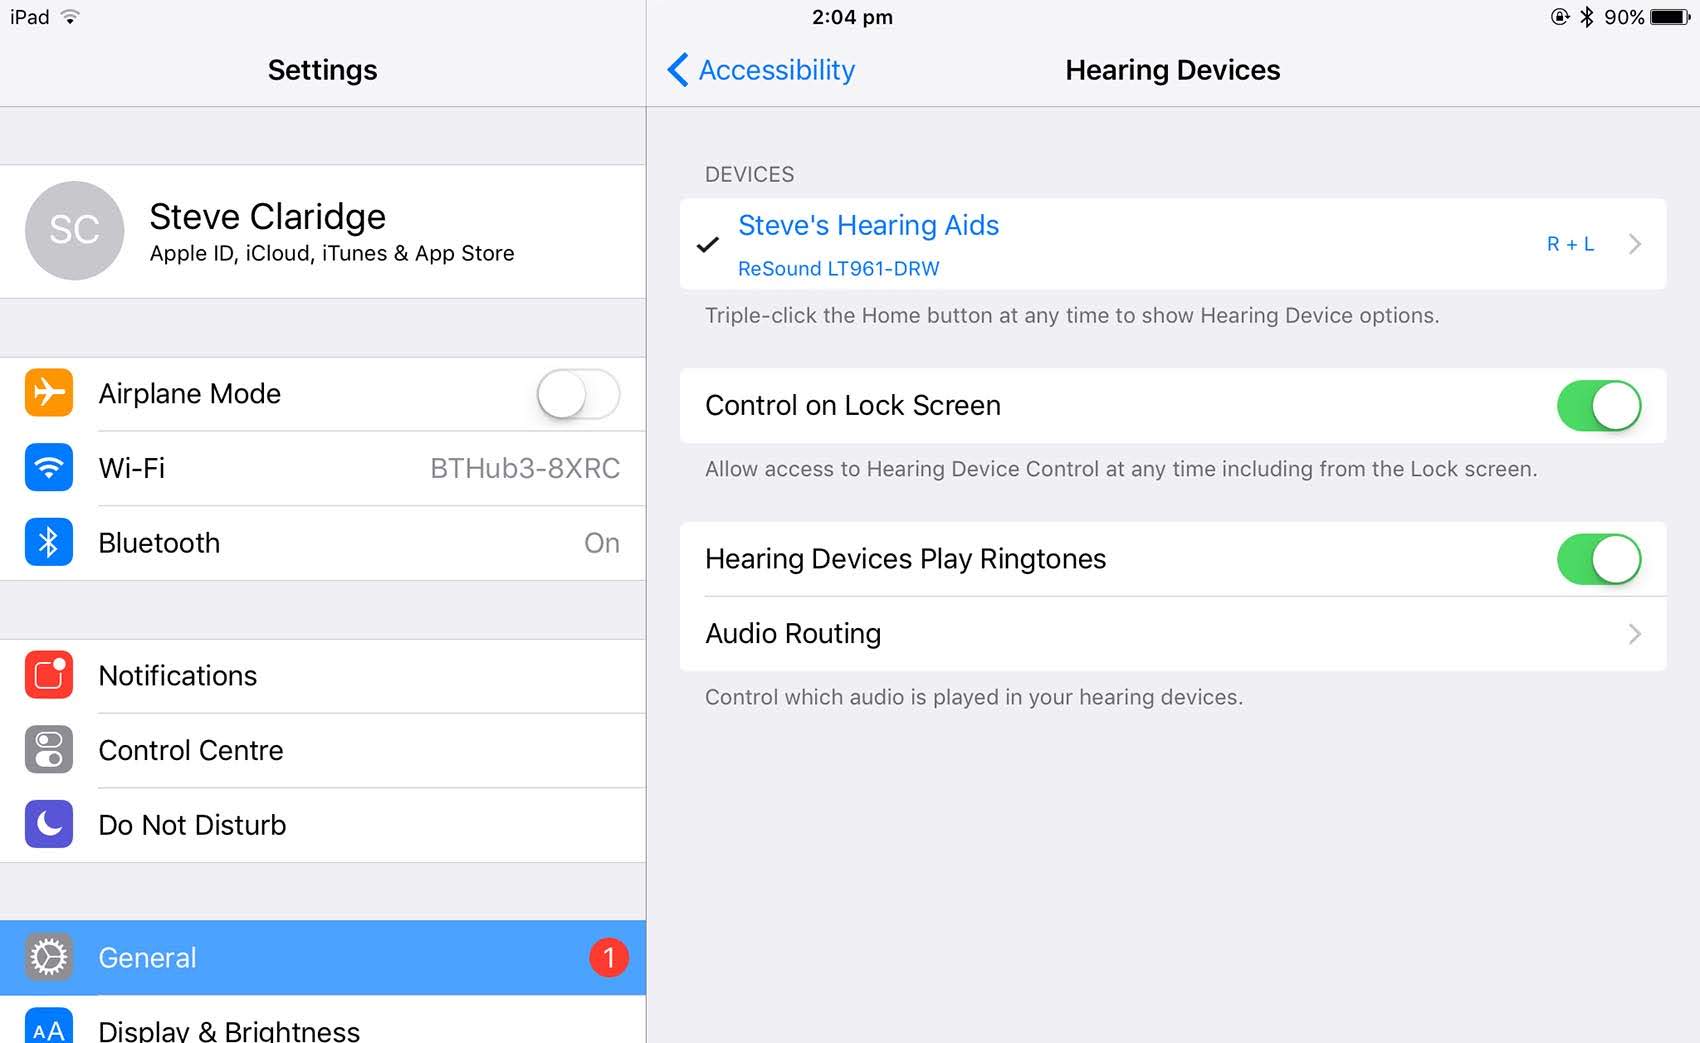 iPad hearing aids interface screenshot